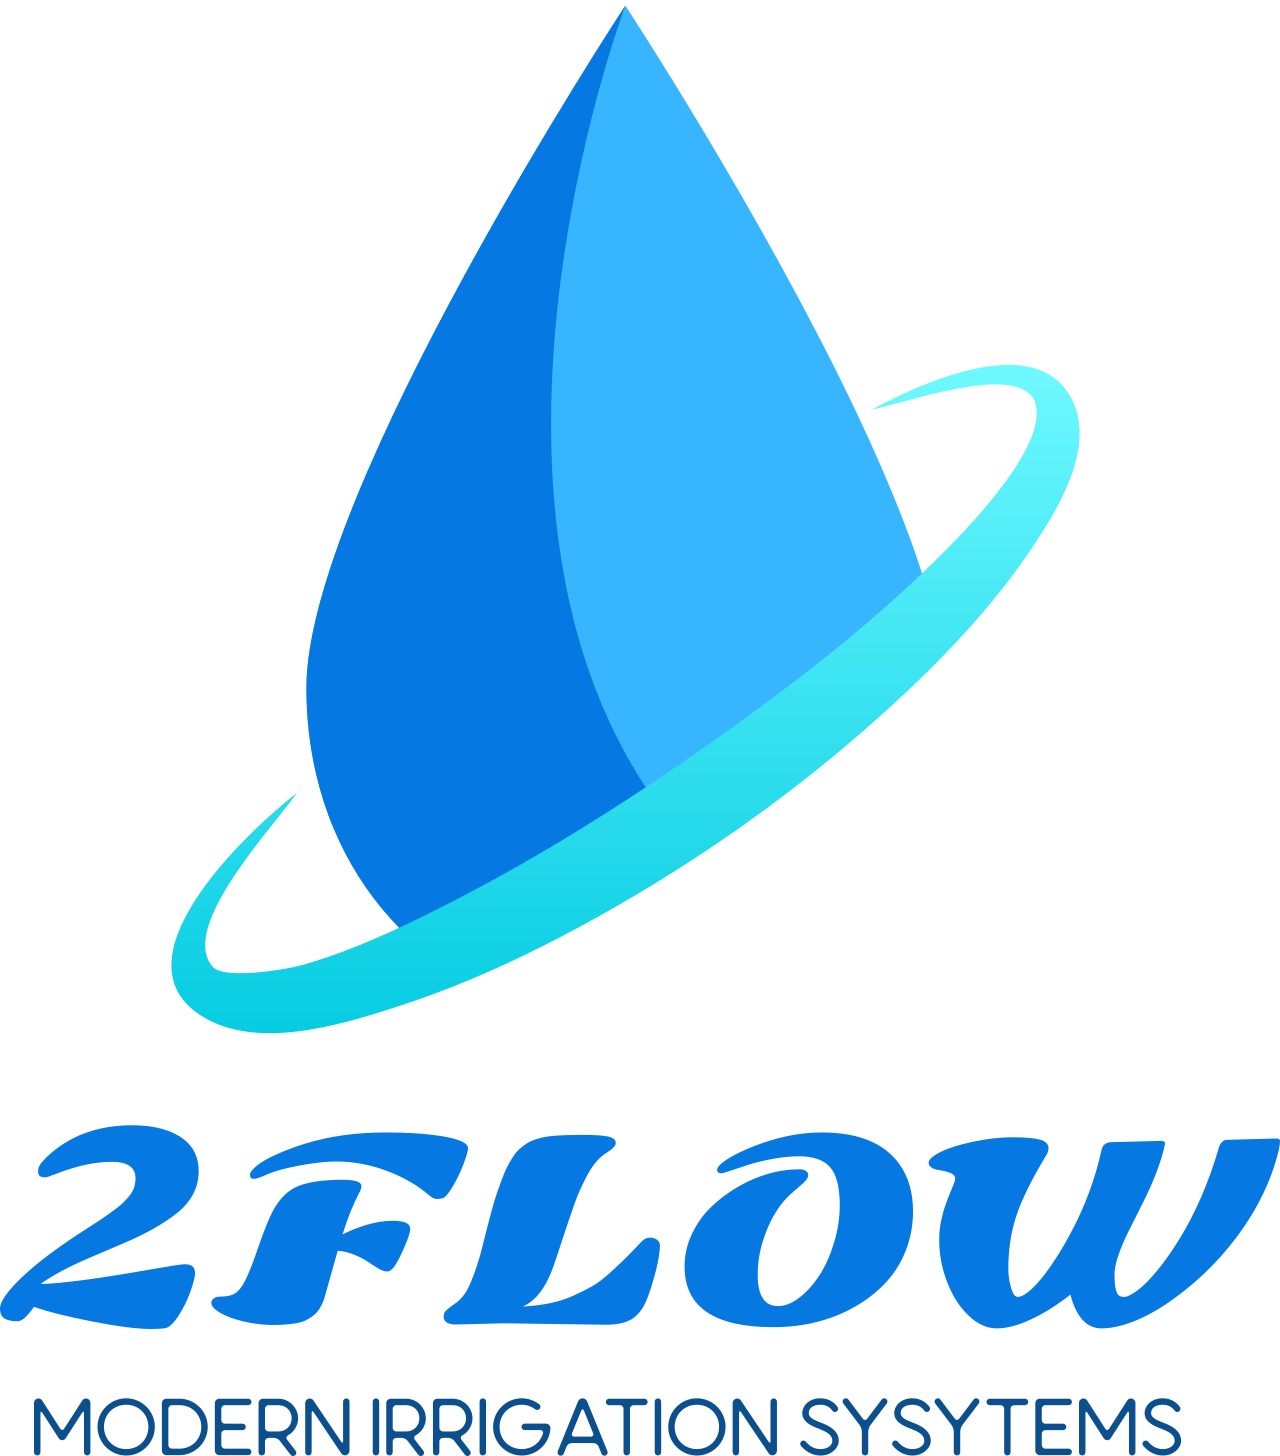 2FLOW's logo